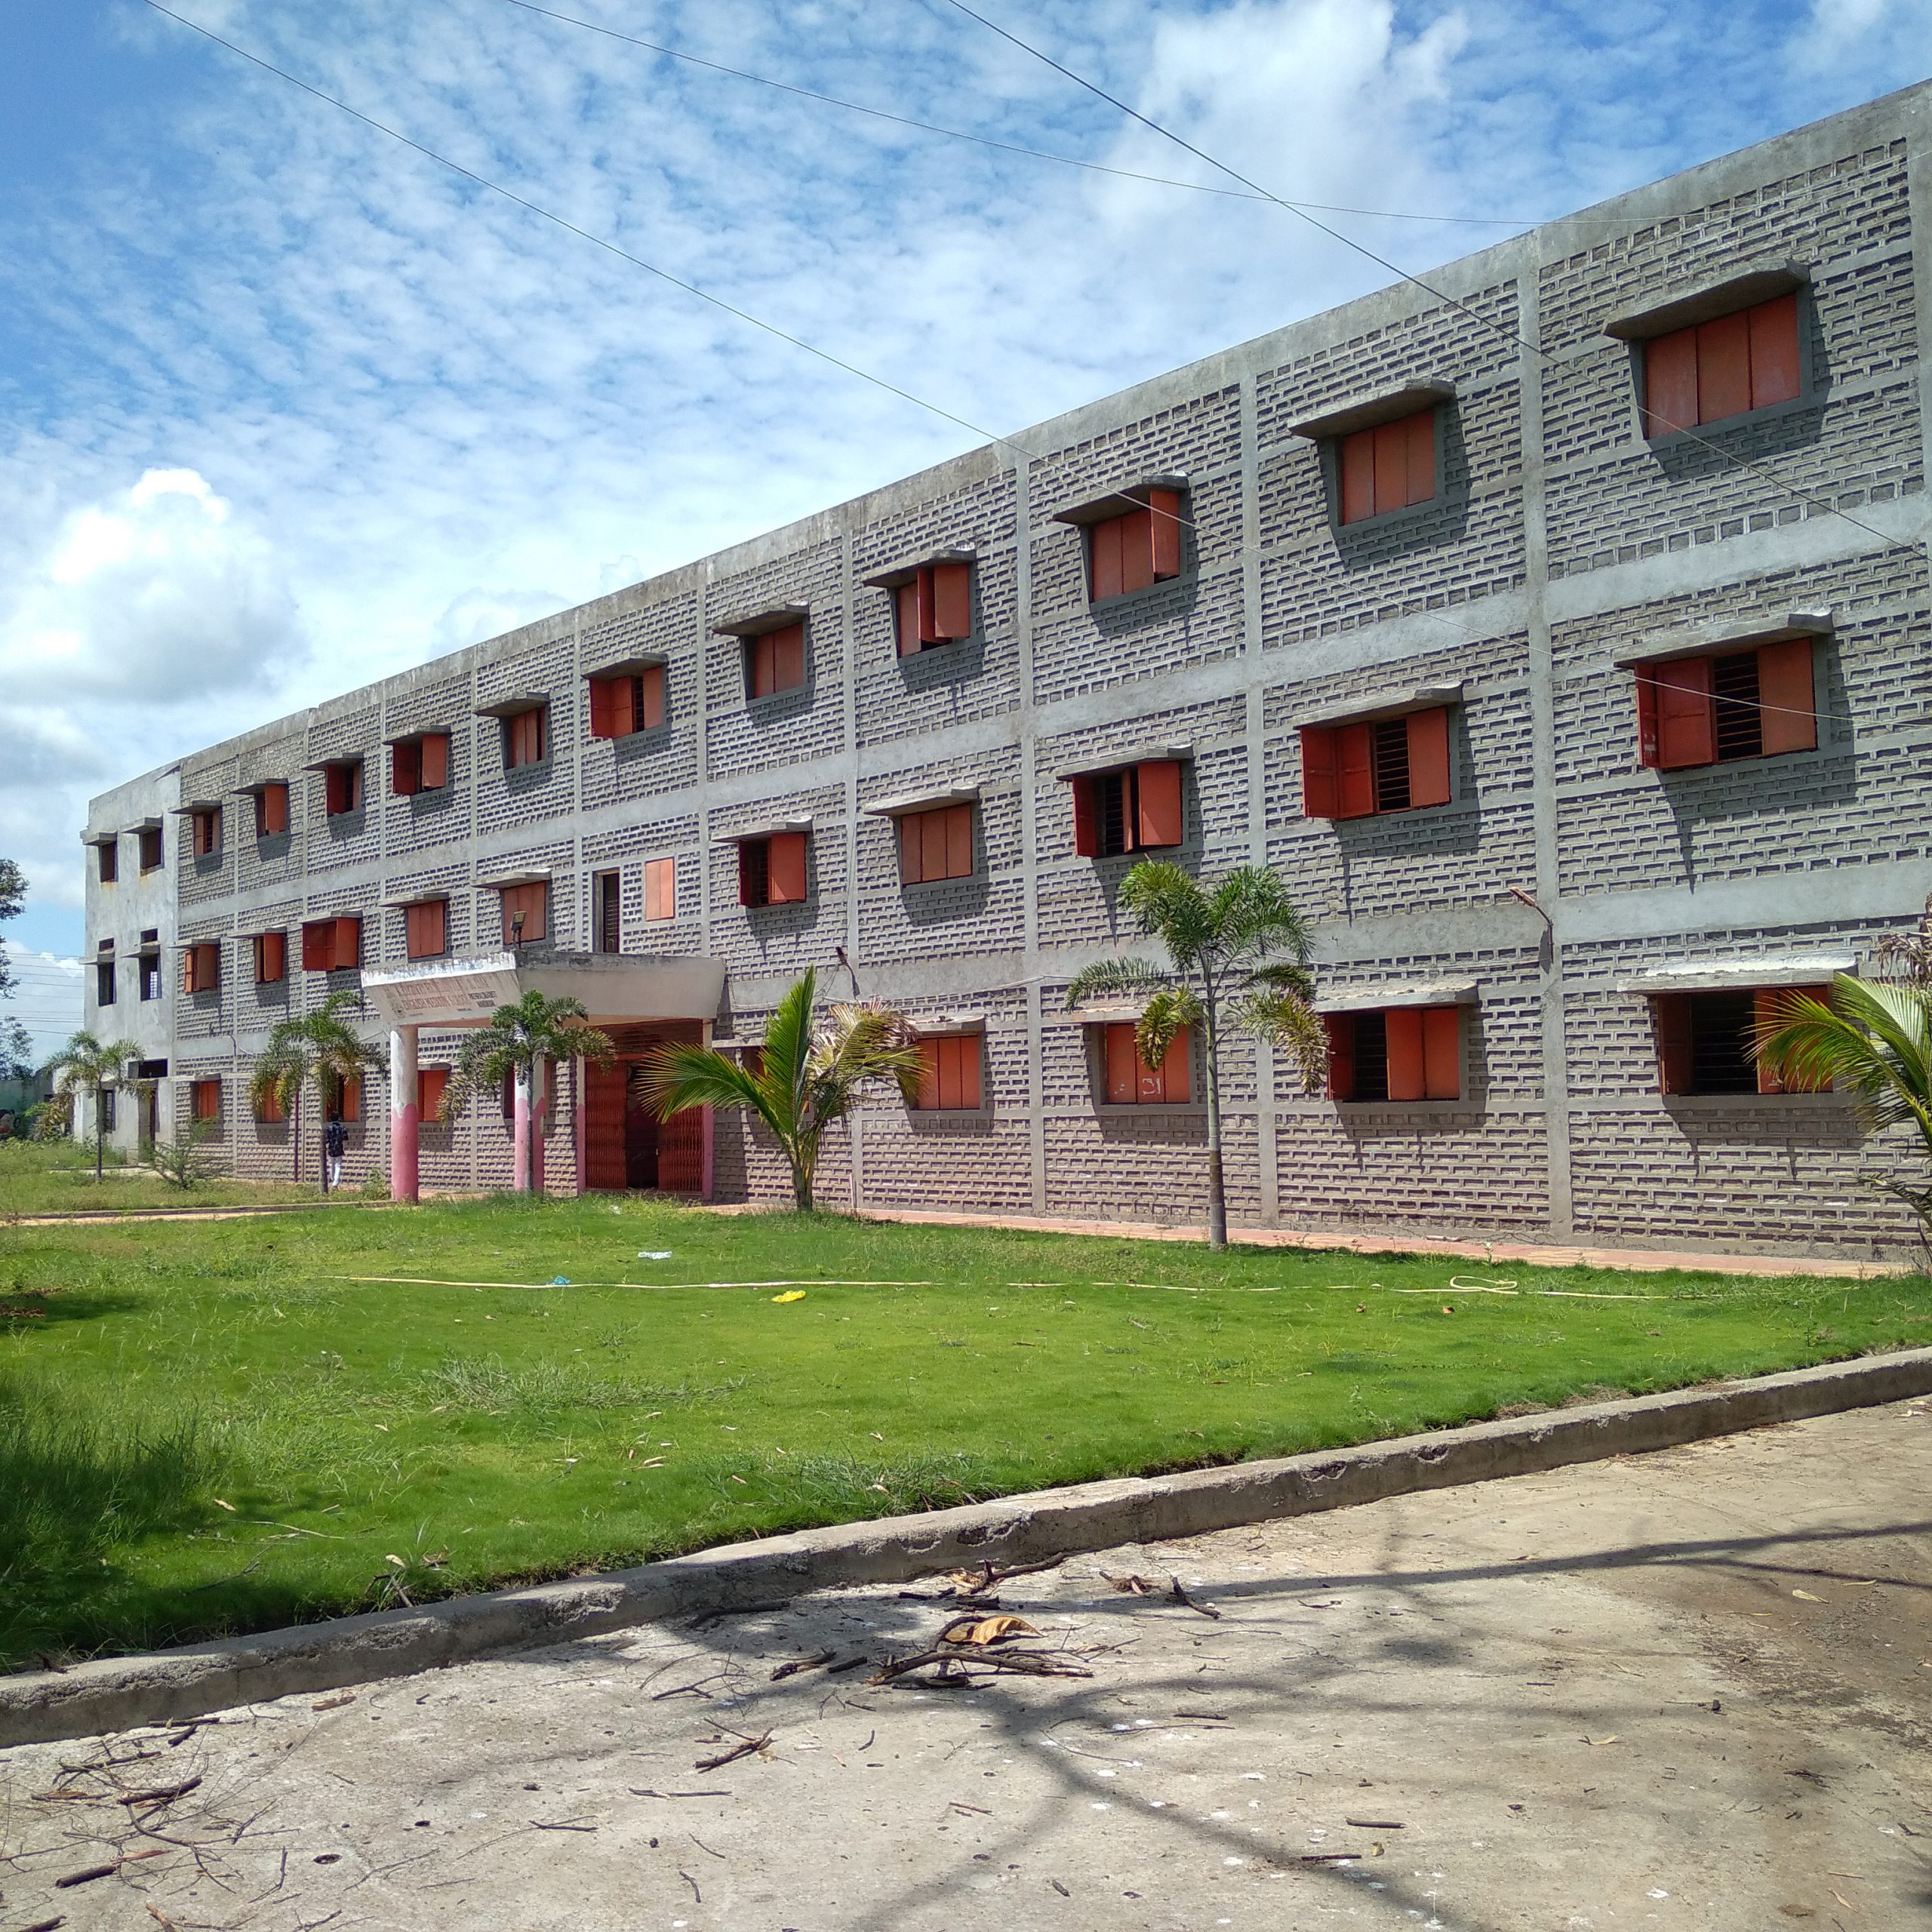 A hostel building